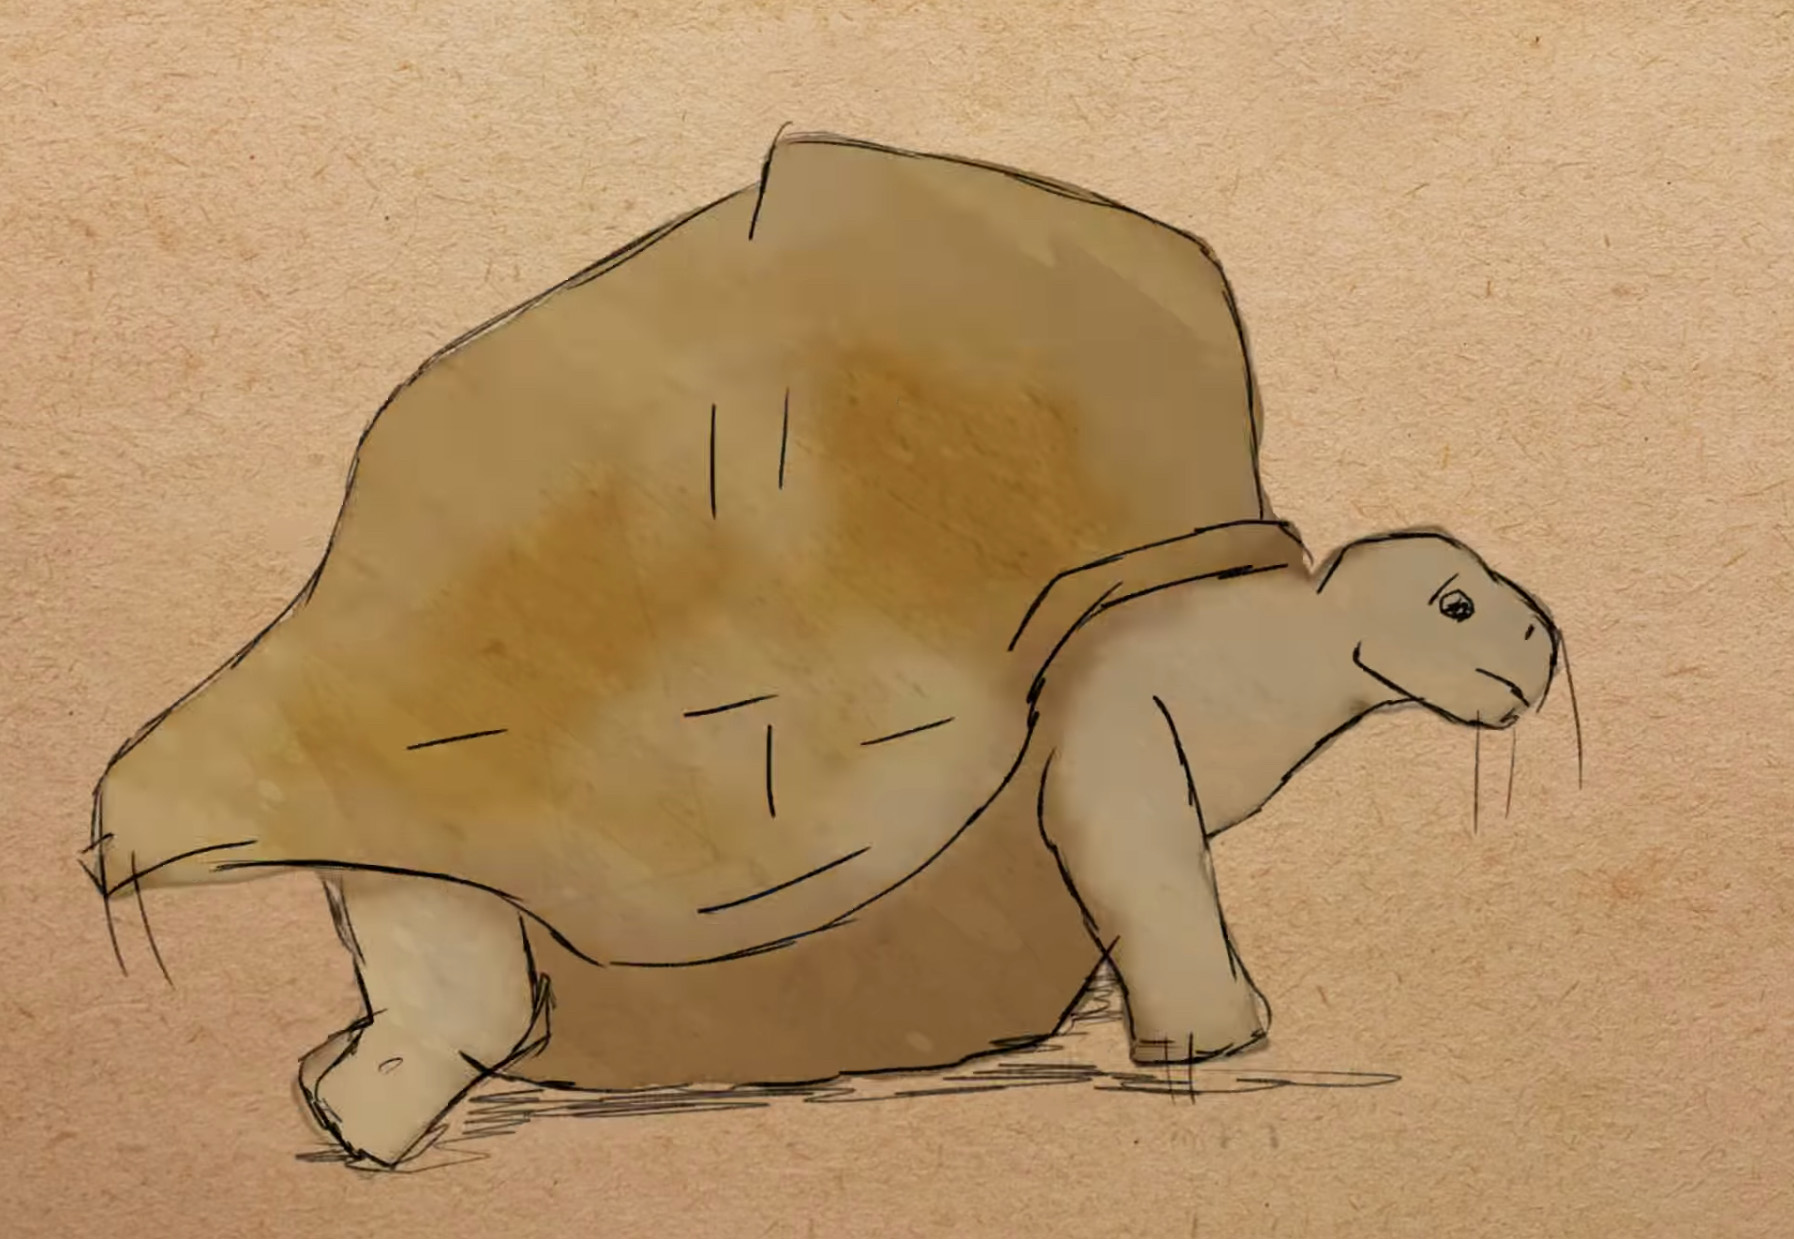 Illustration of an extinct pinta giant tortoise